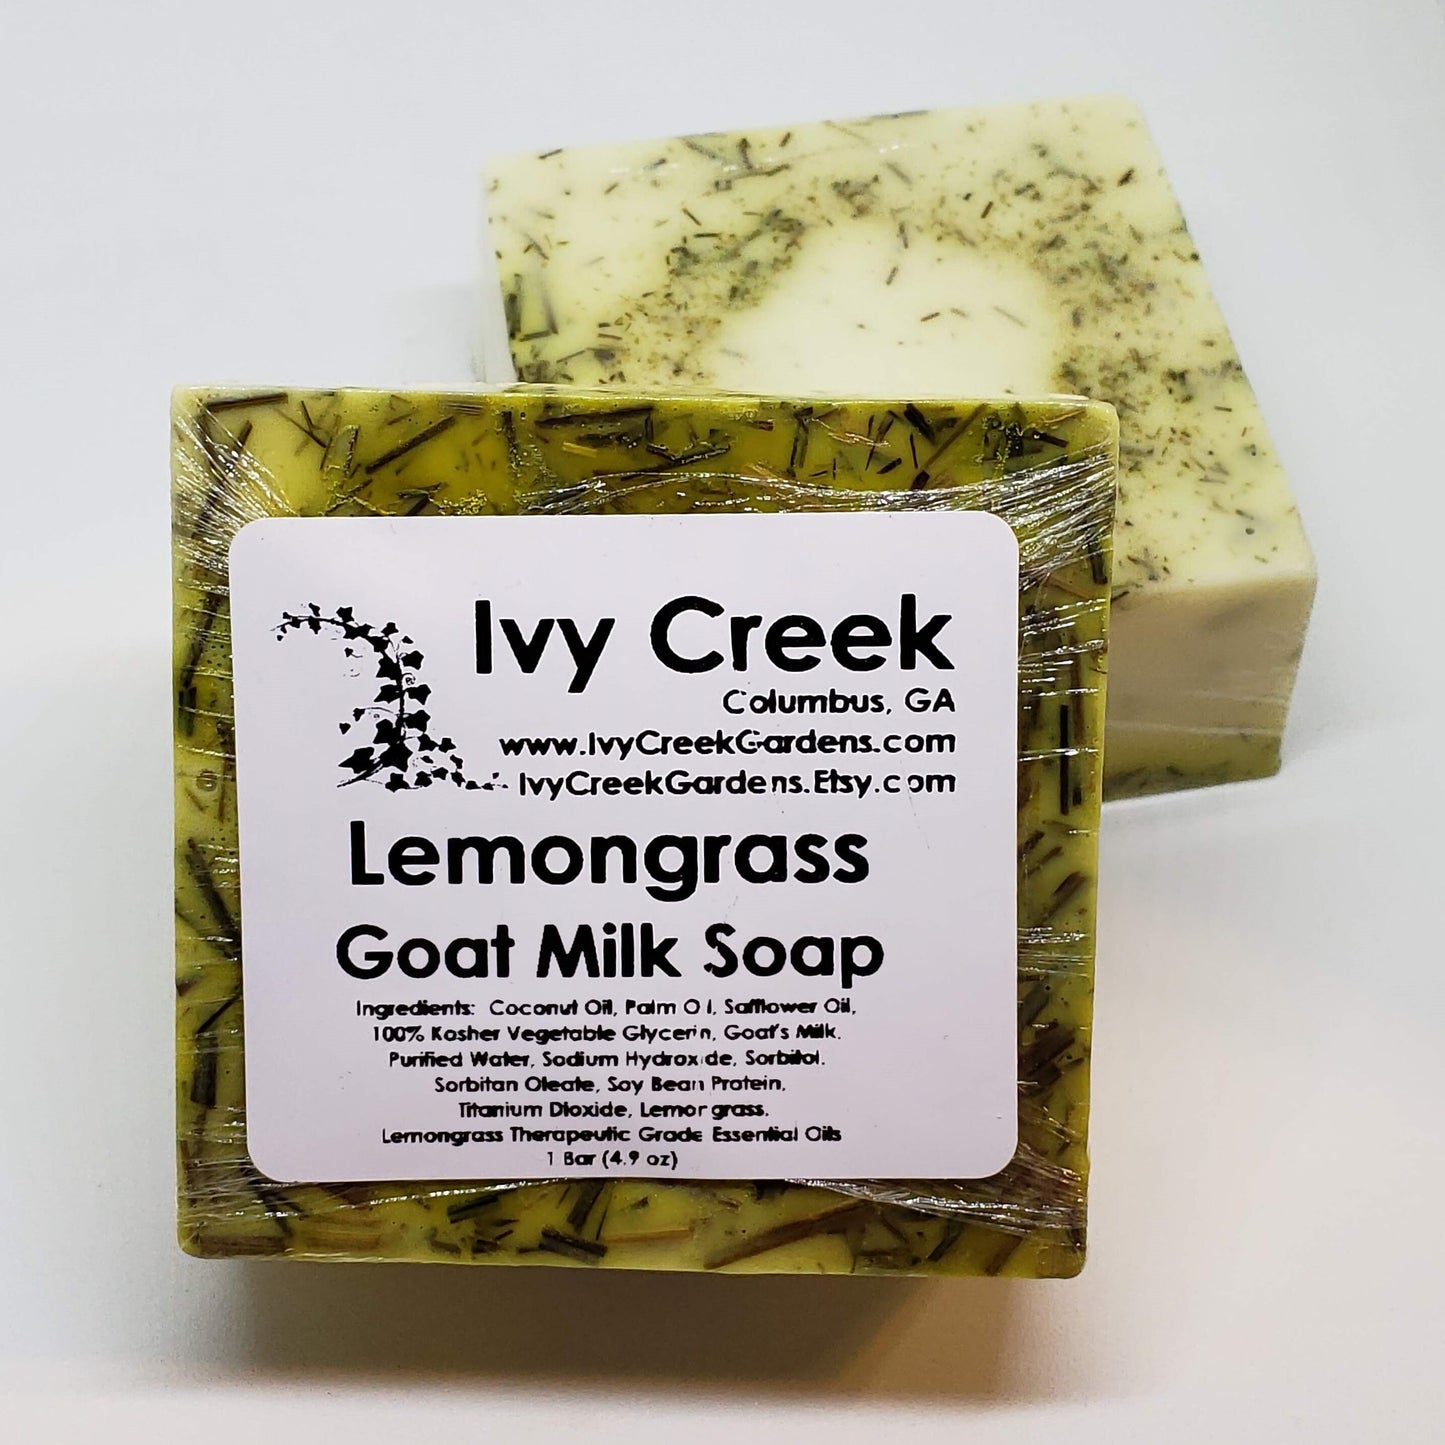 Ivy Creek Lemongrass Goat Milk Soap | Natural Handmade Soap | Holistic Soap | 4.9 oz